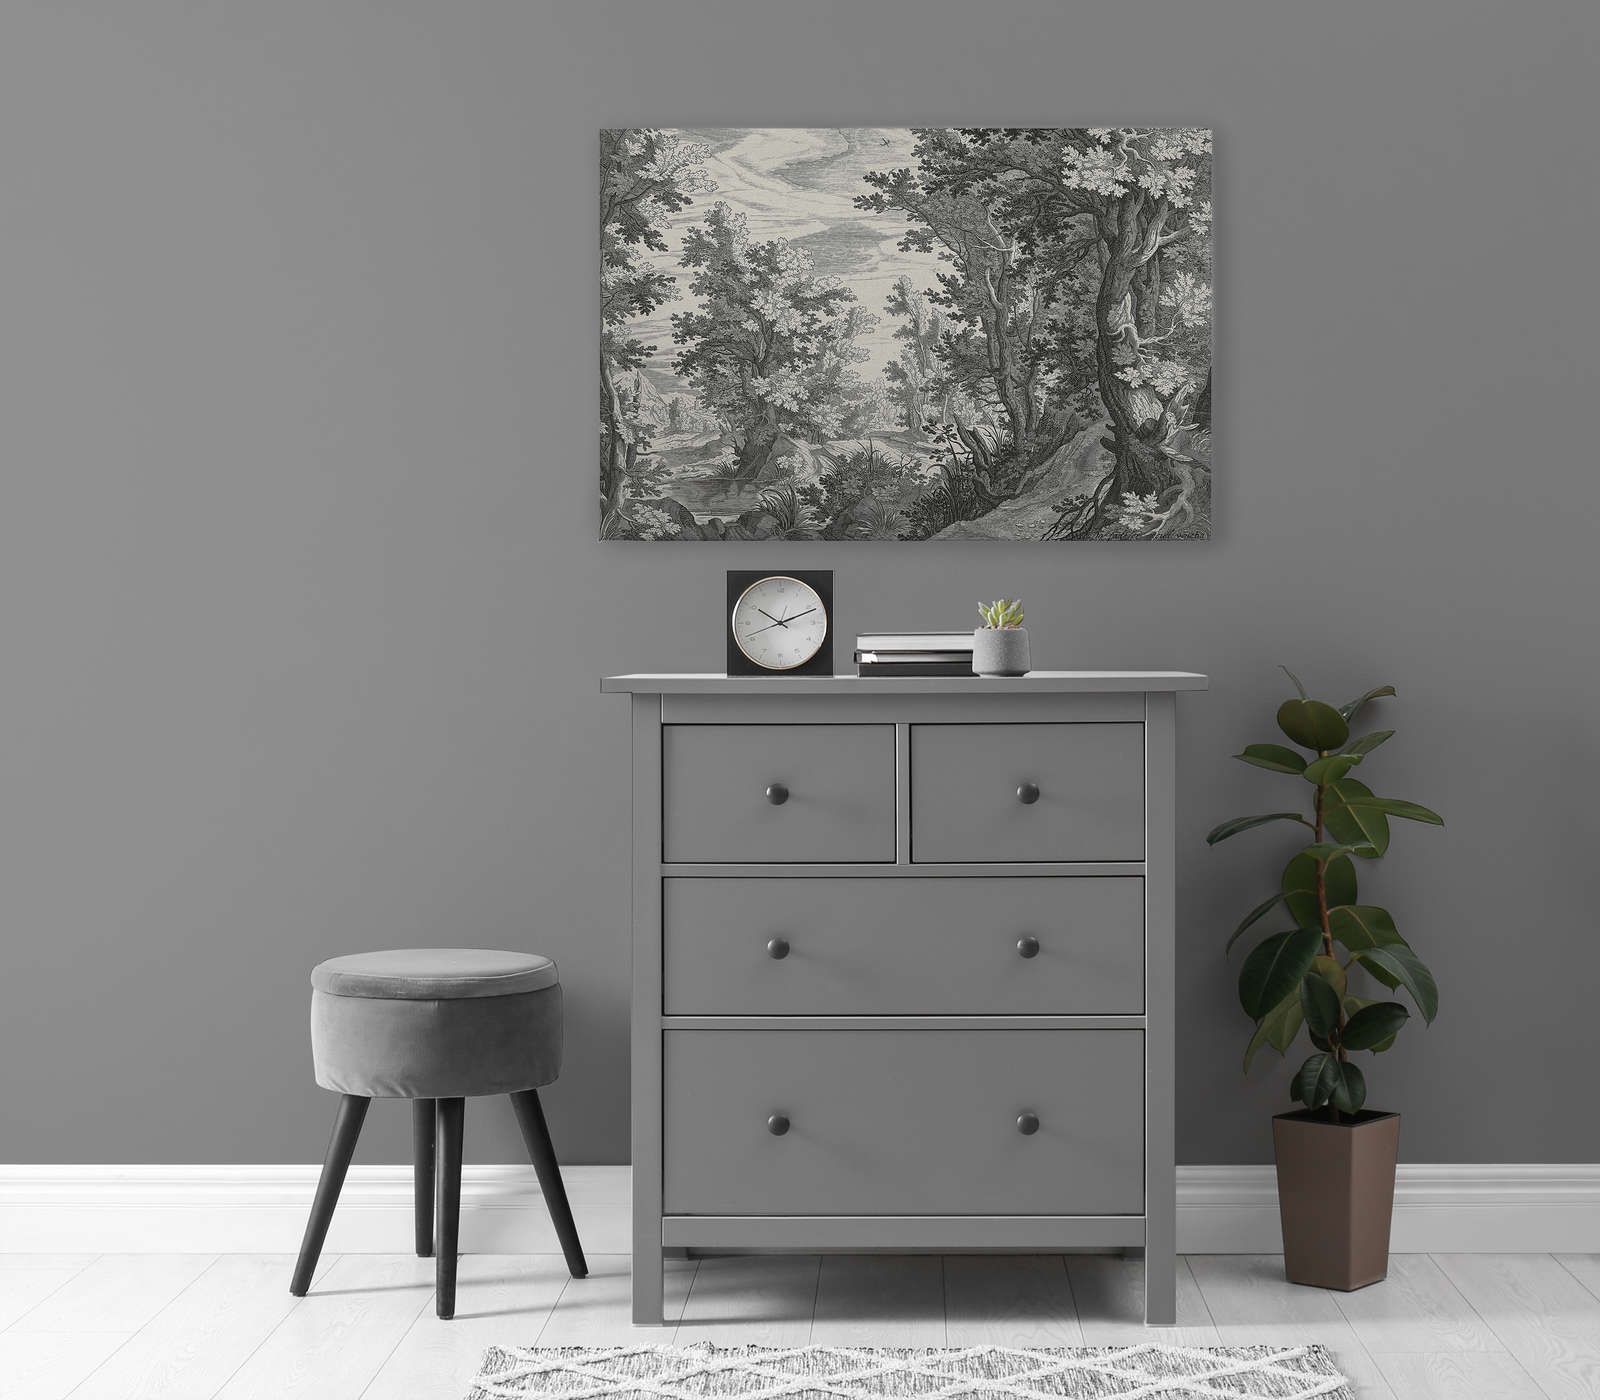             Fancy Forest 3 - Canvas painting Landscape Copperplate Black & White - 0.90 m x 0.60 m
        